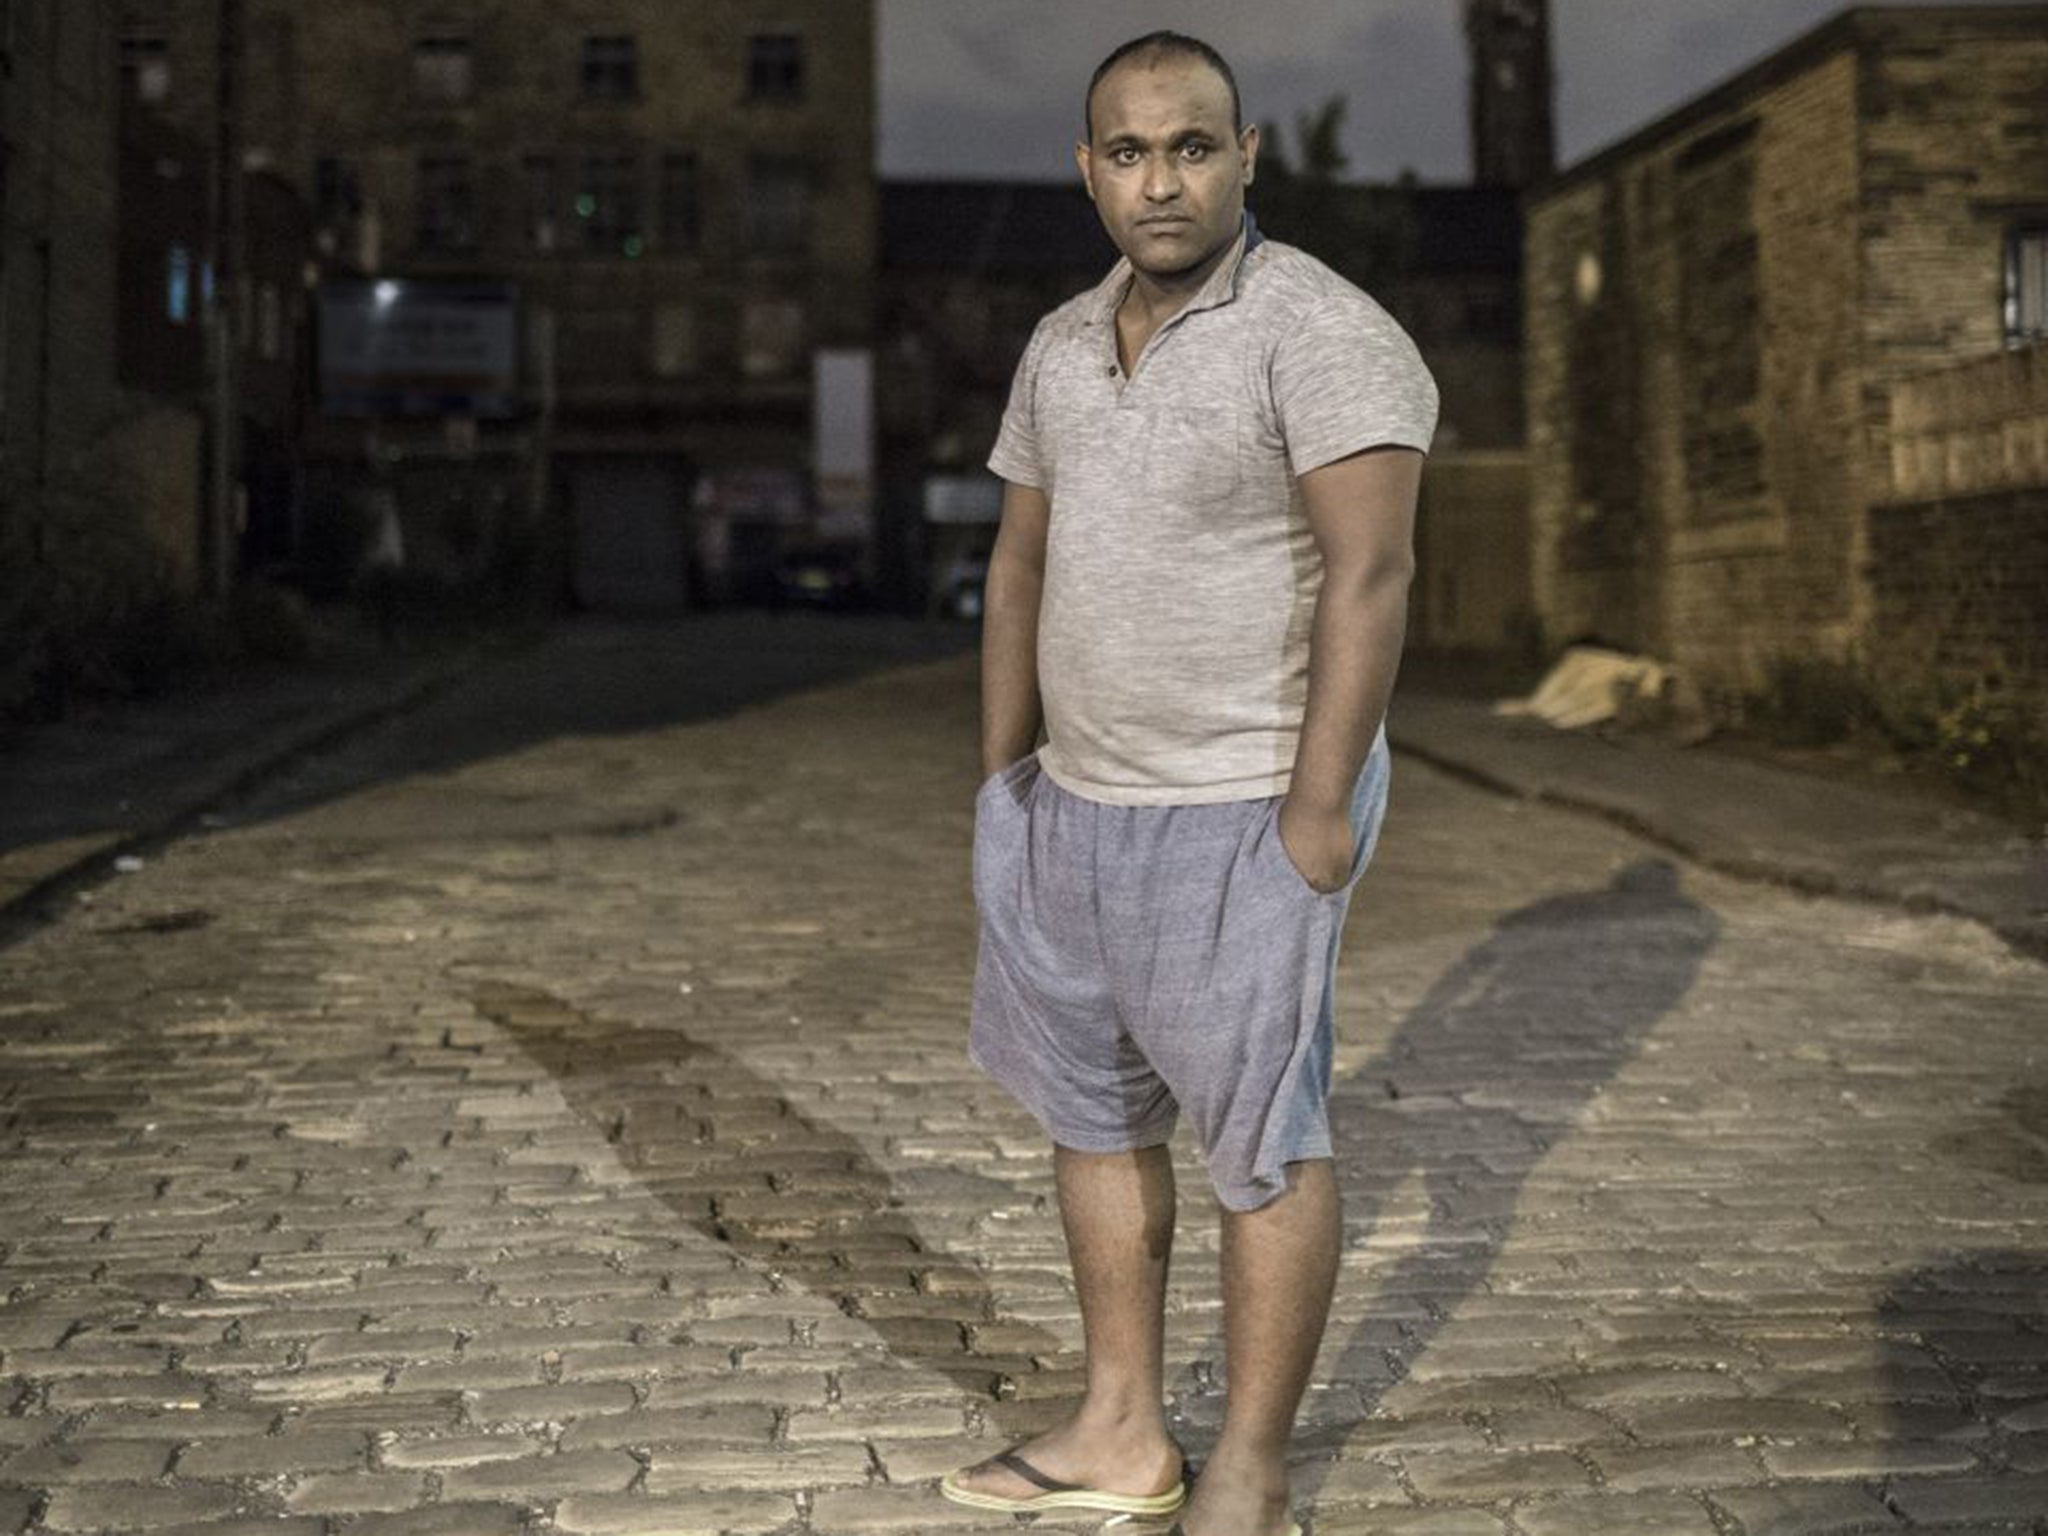 Abdulrahim Ali has been granted asylum and lives in Bradford